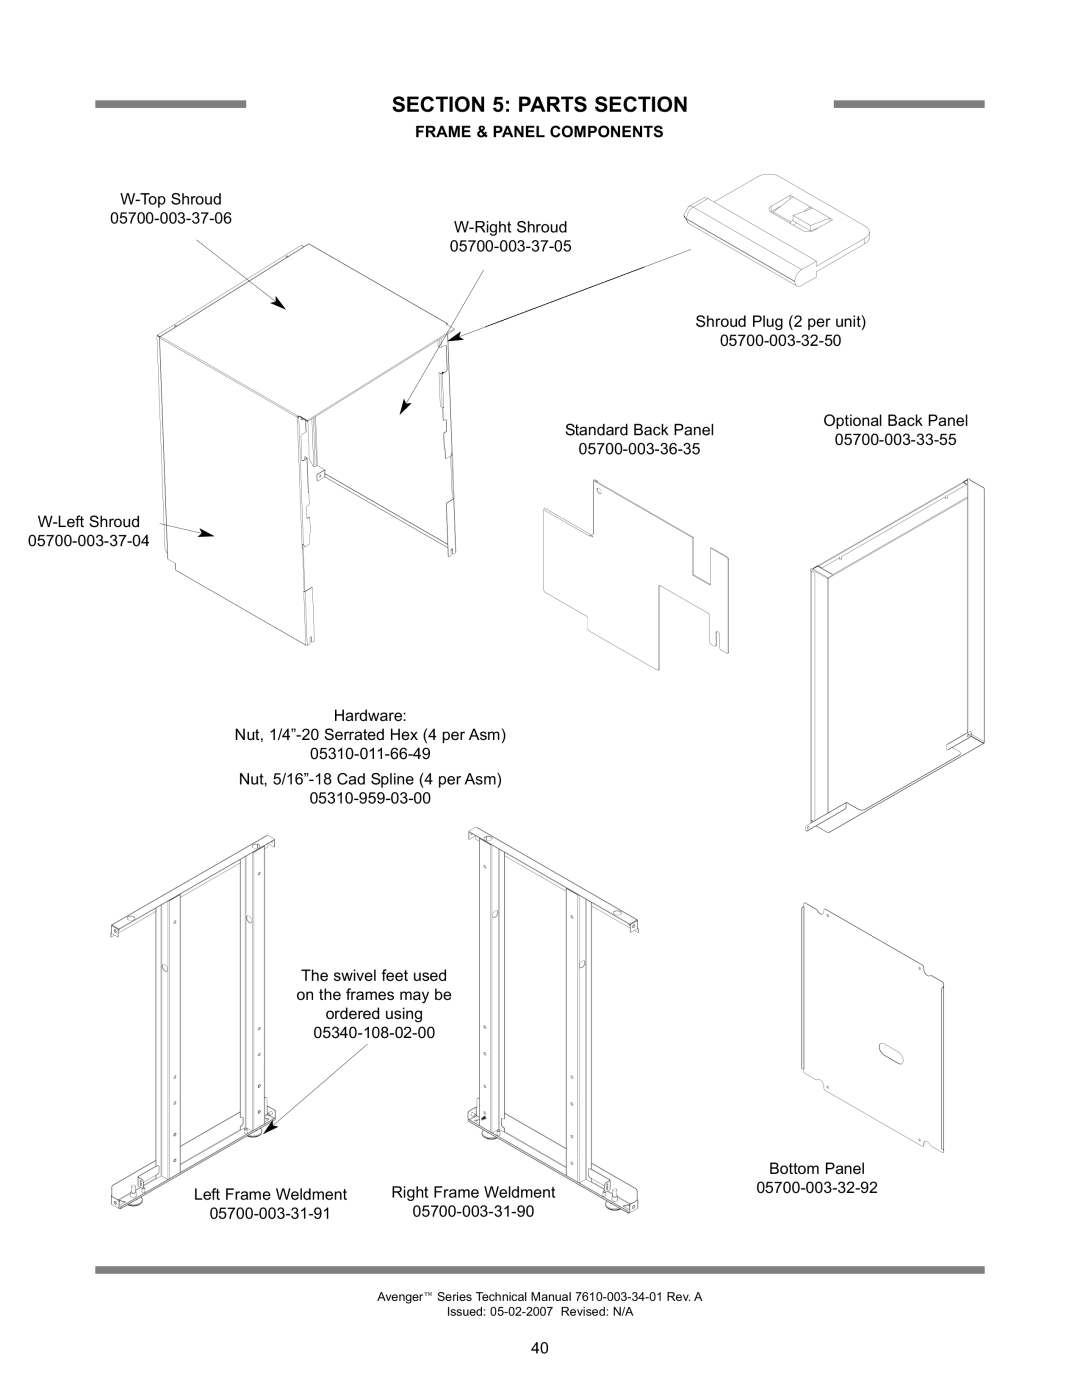 Jackson Avenger LT, Avenger HT technical manual Frame & Panel Components, Parts Section 